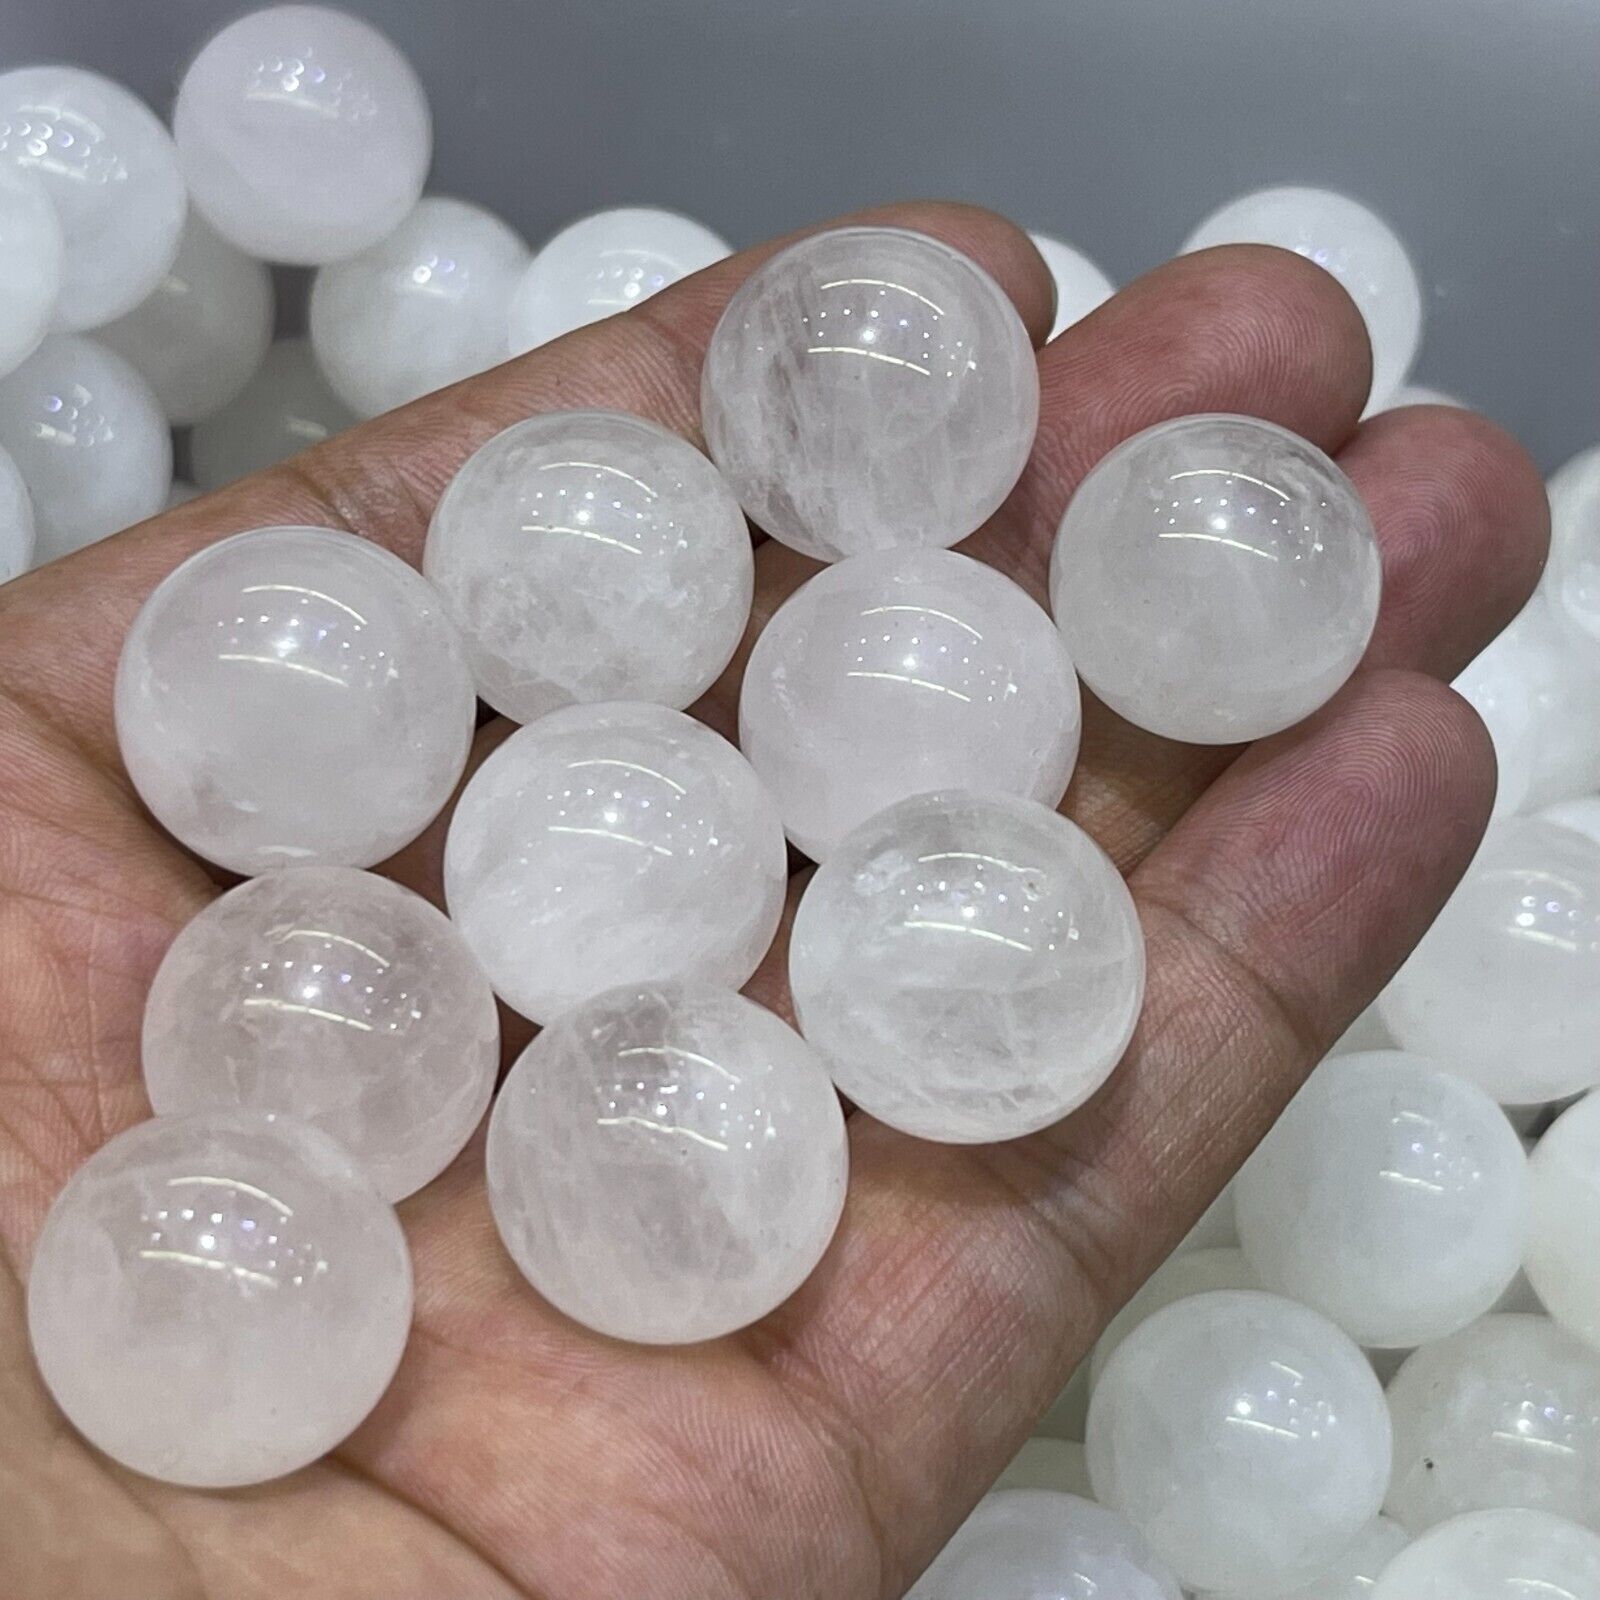 10pc Natural clear quartz ball carved crystal 20mm sphere gem reiki healing